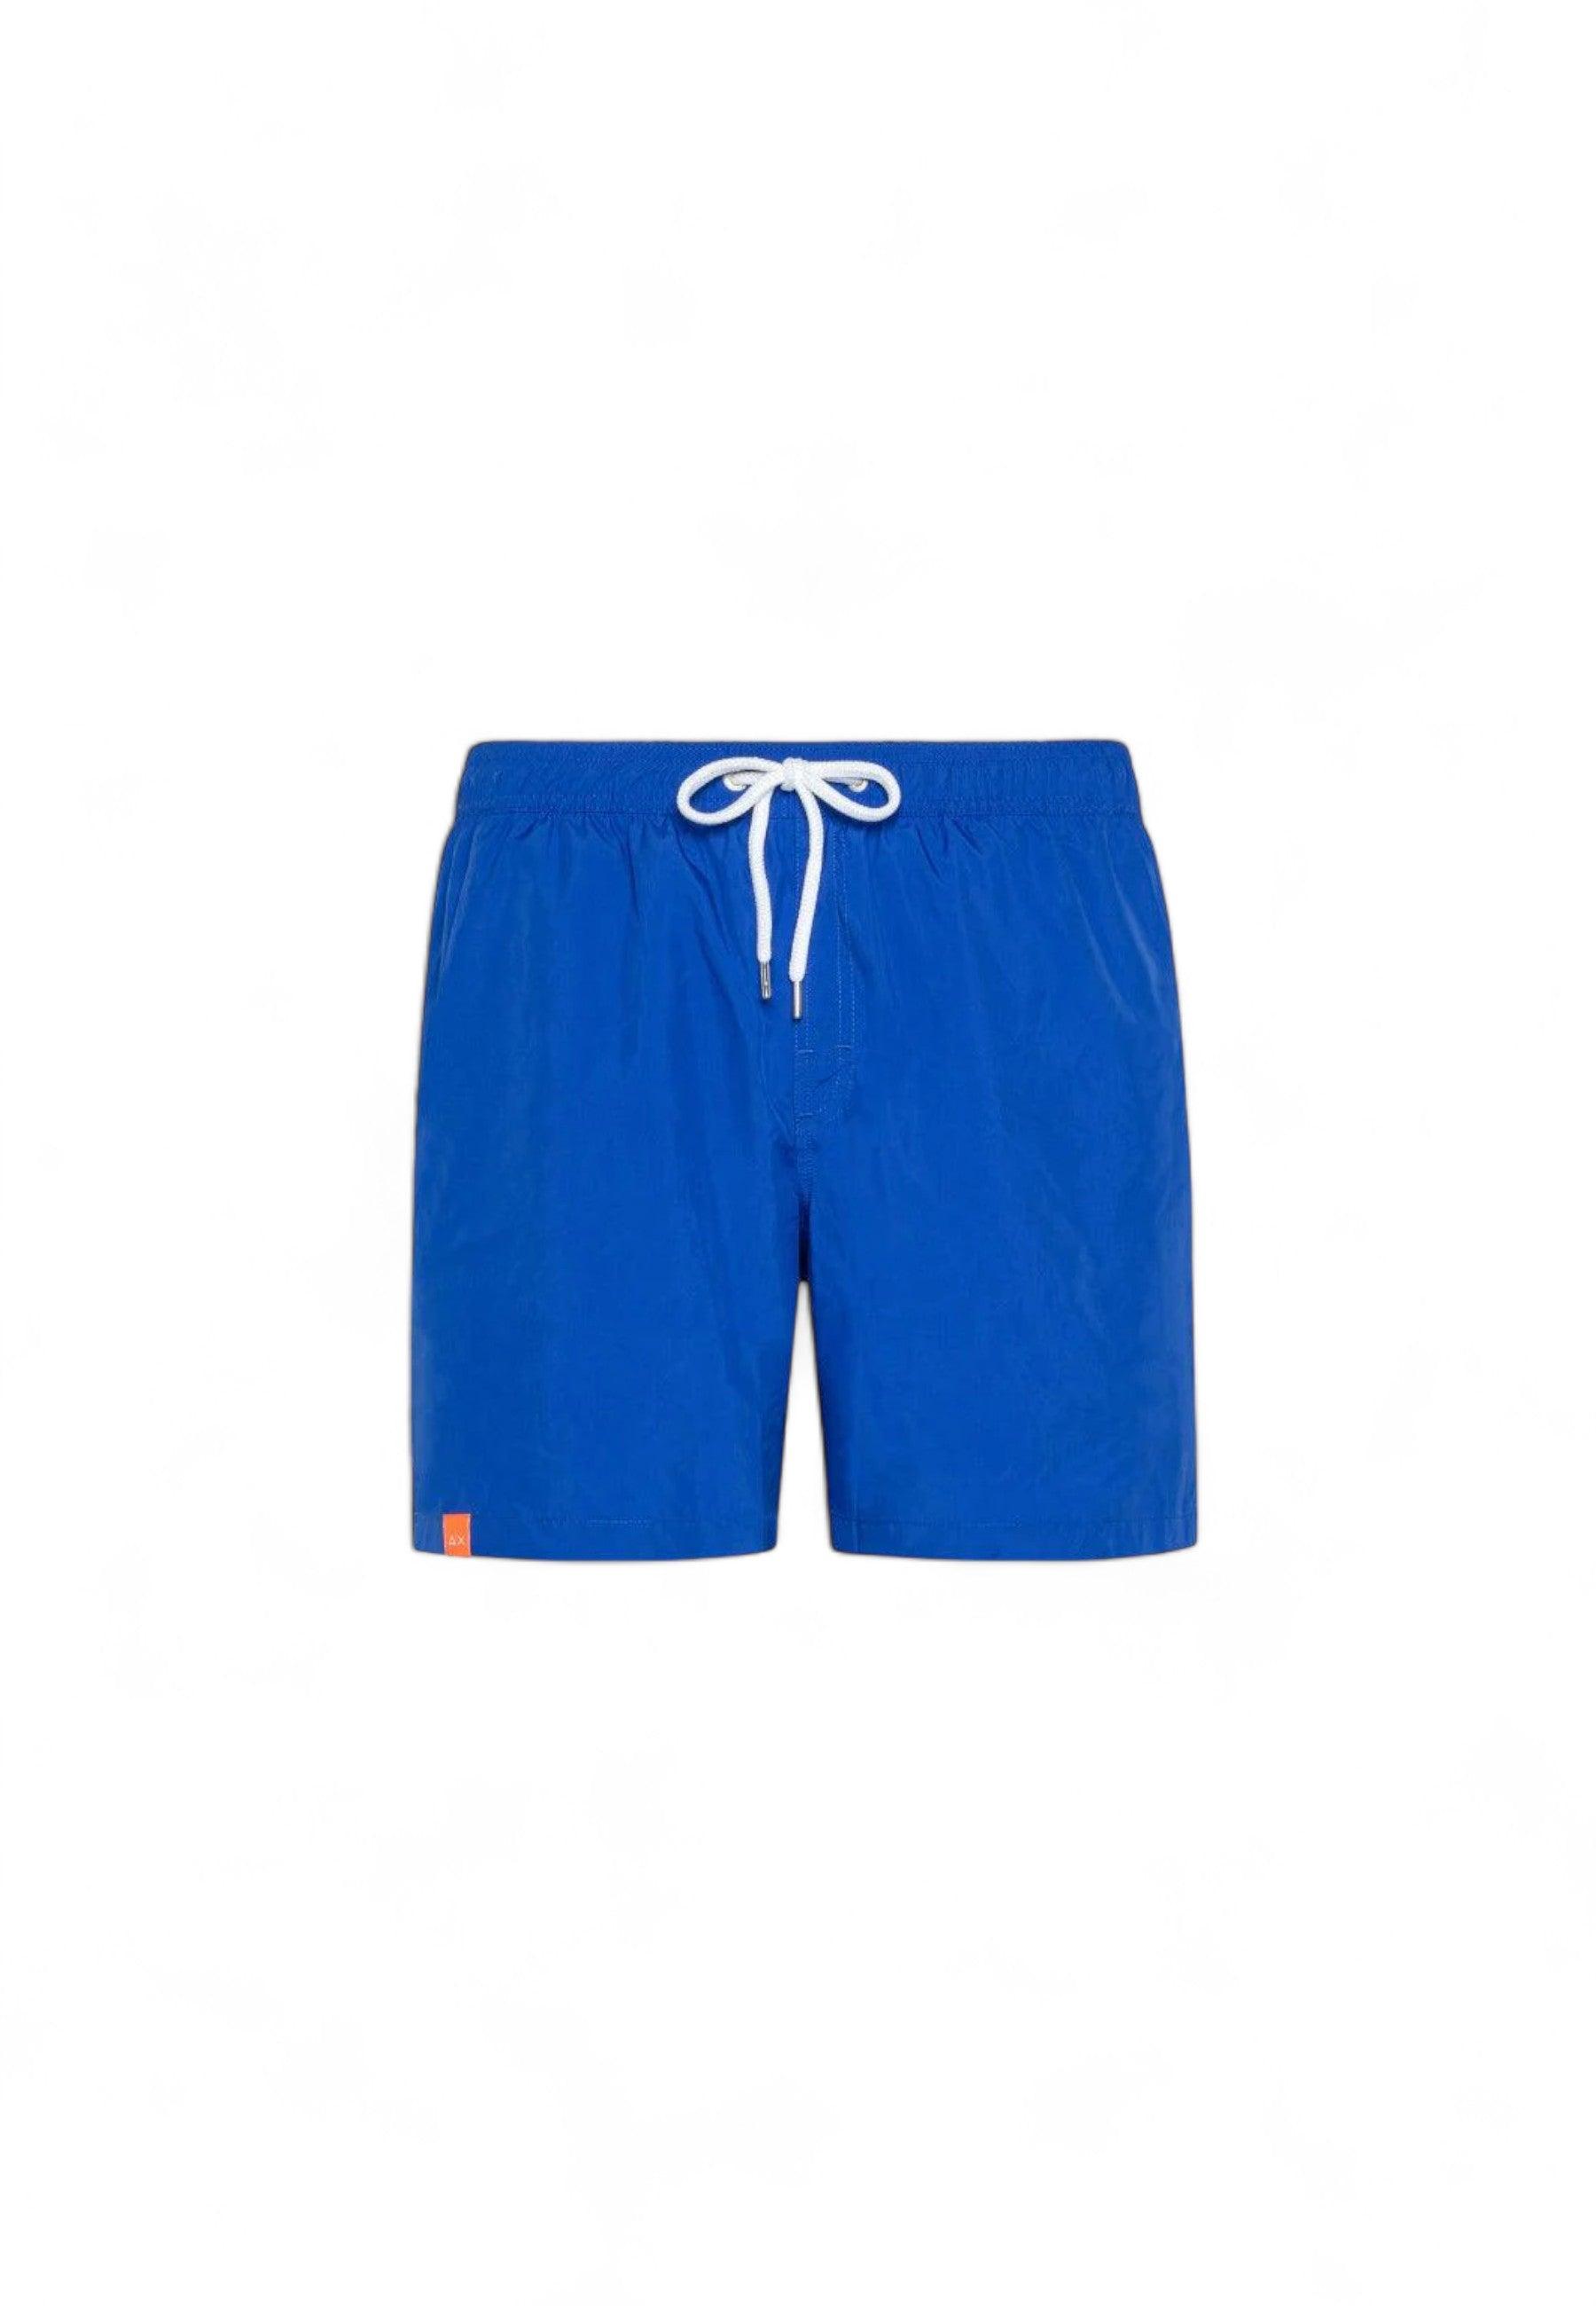 SUN68 Beachwear Swim Pant Packable Costume Blu Royal H32101 - Sandrini Calzature e Abbigliamento